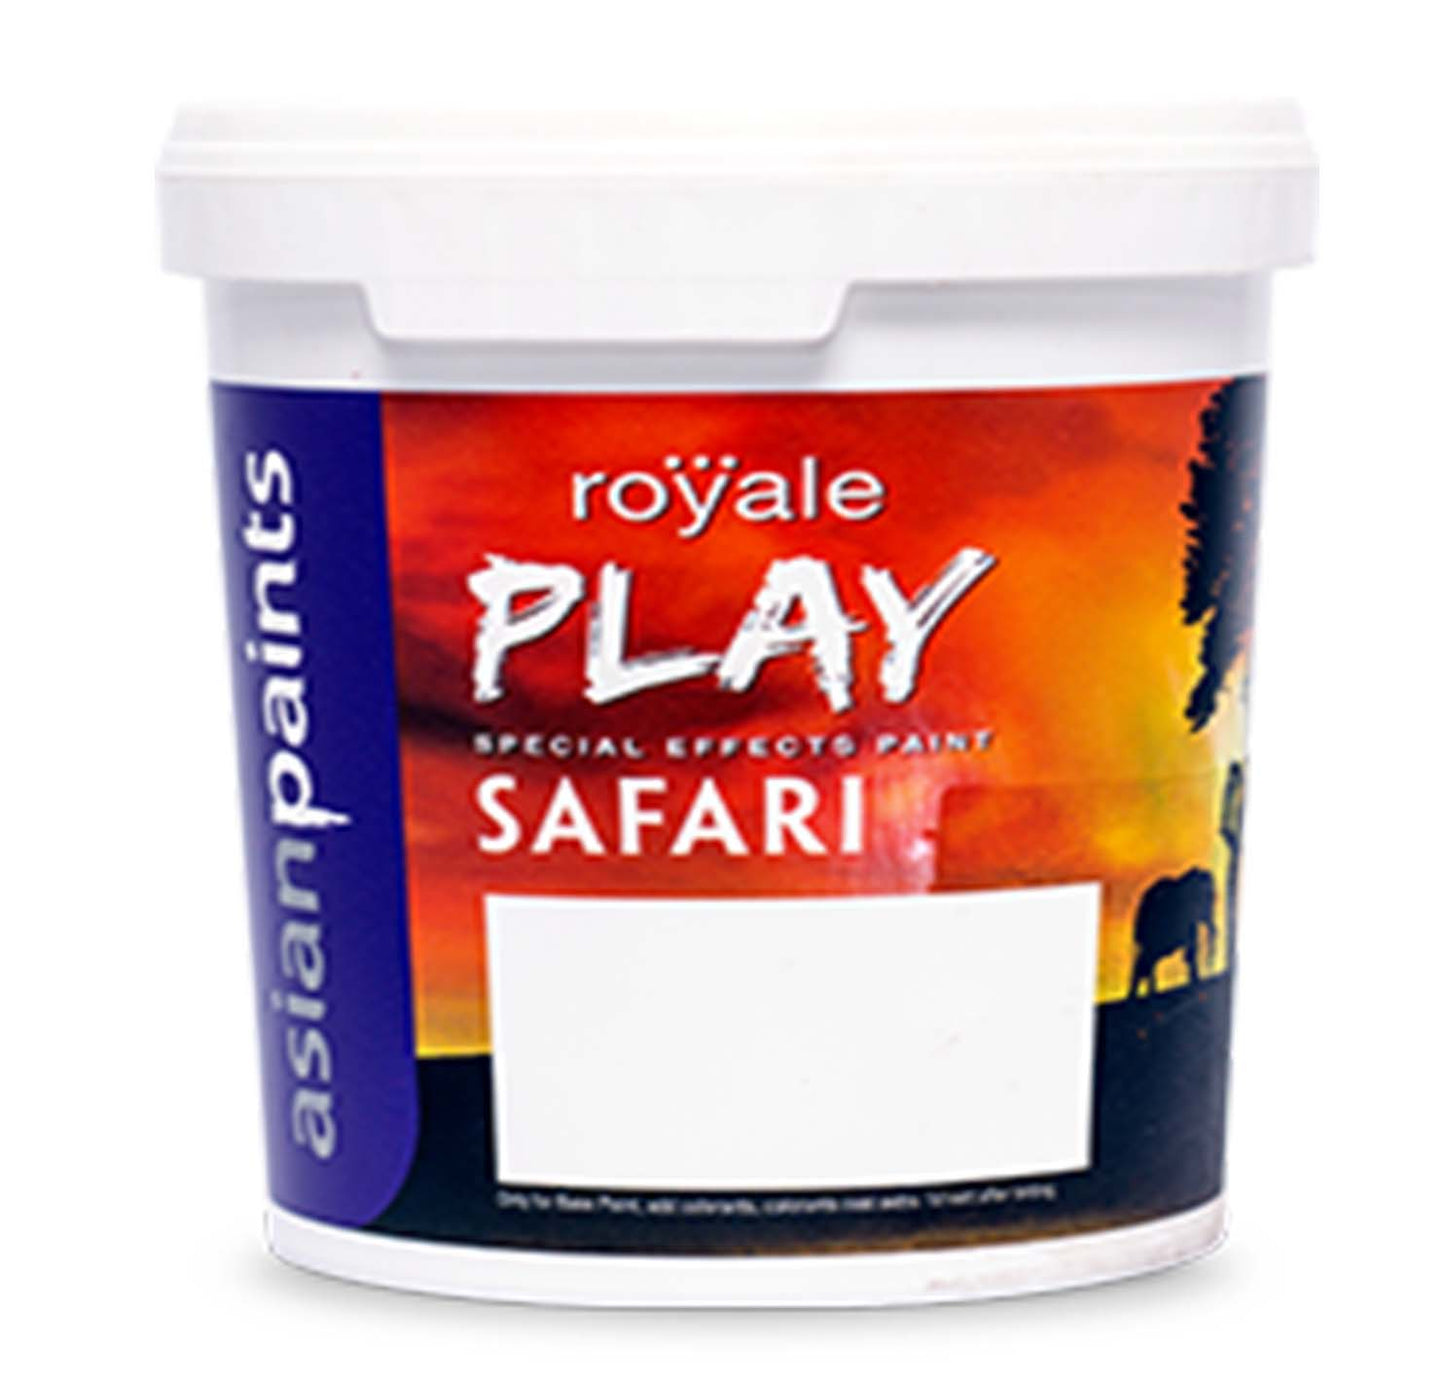 Asian Paints Royale Play Safari 1 Liter